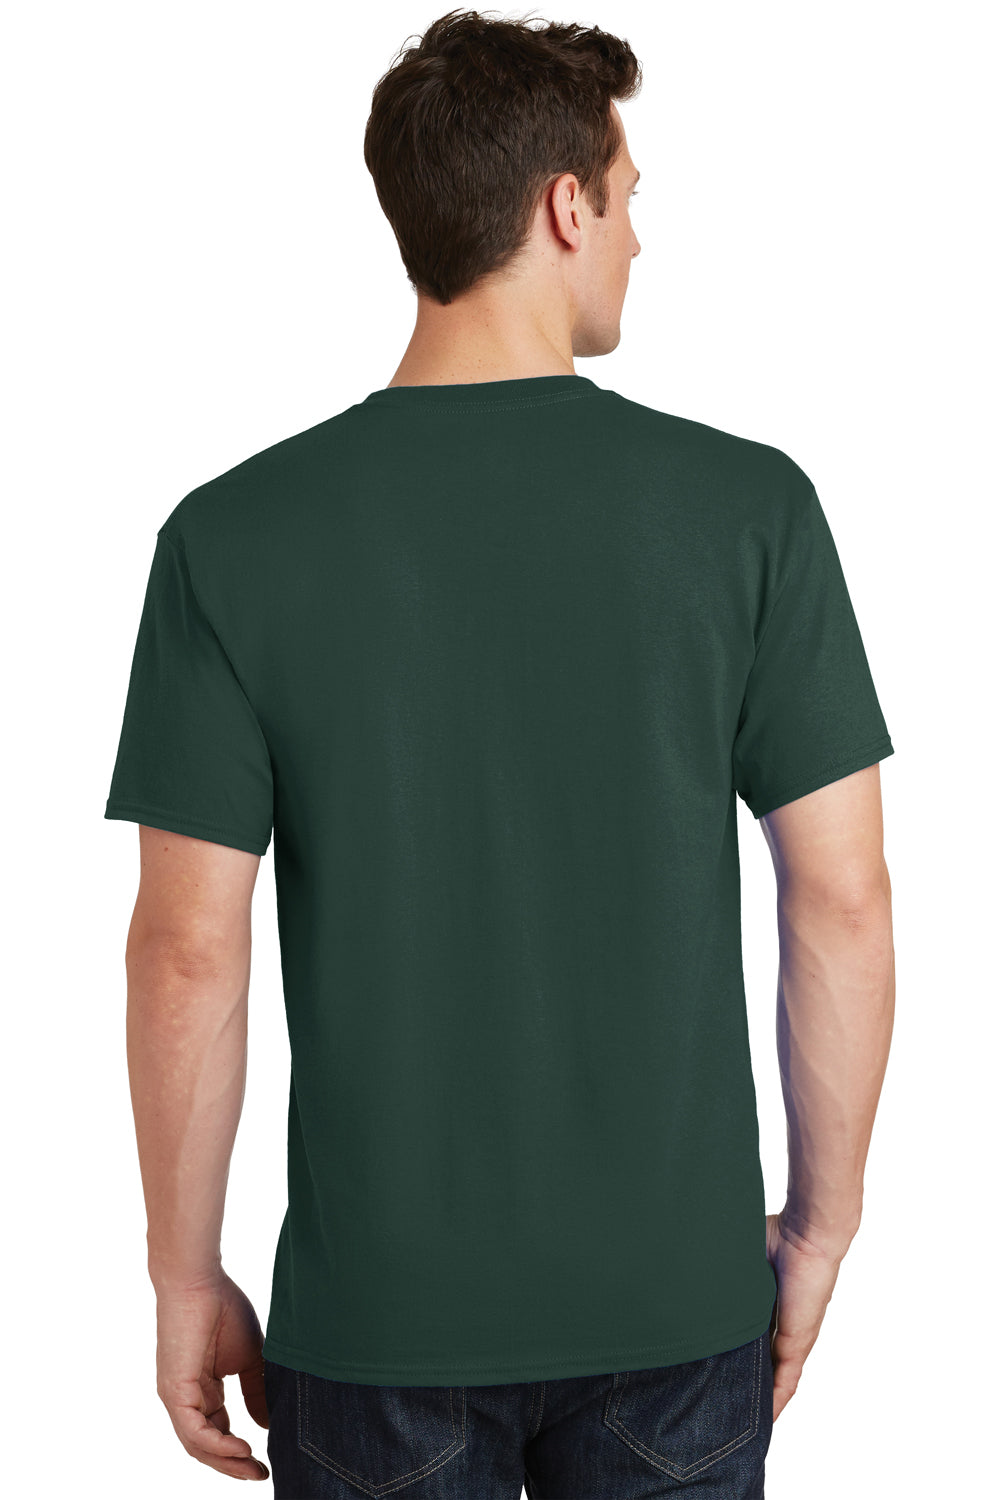 Port & Company PC54 Mens Core Short Sleeve Crewneck T-Shirt Dark Green Back